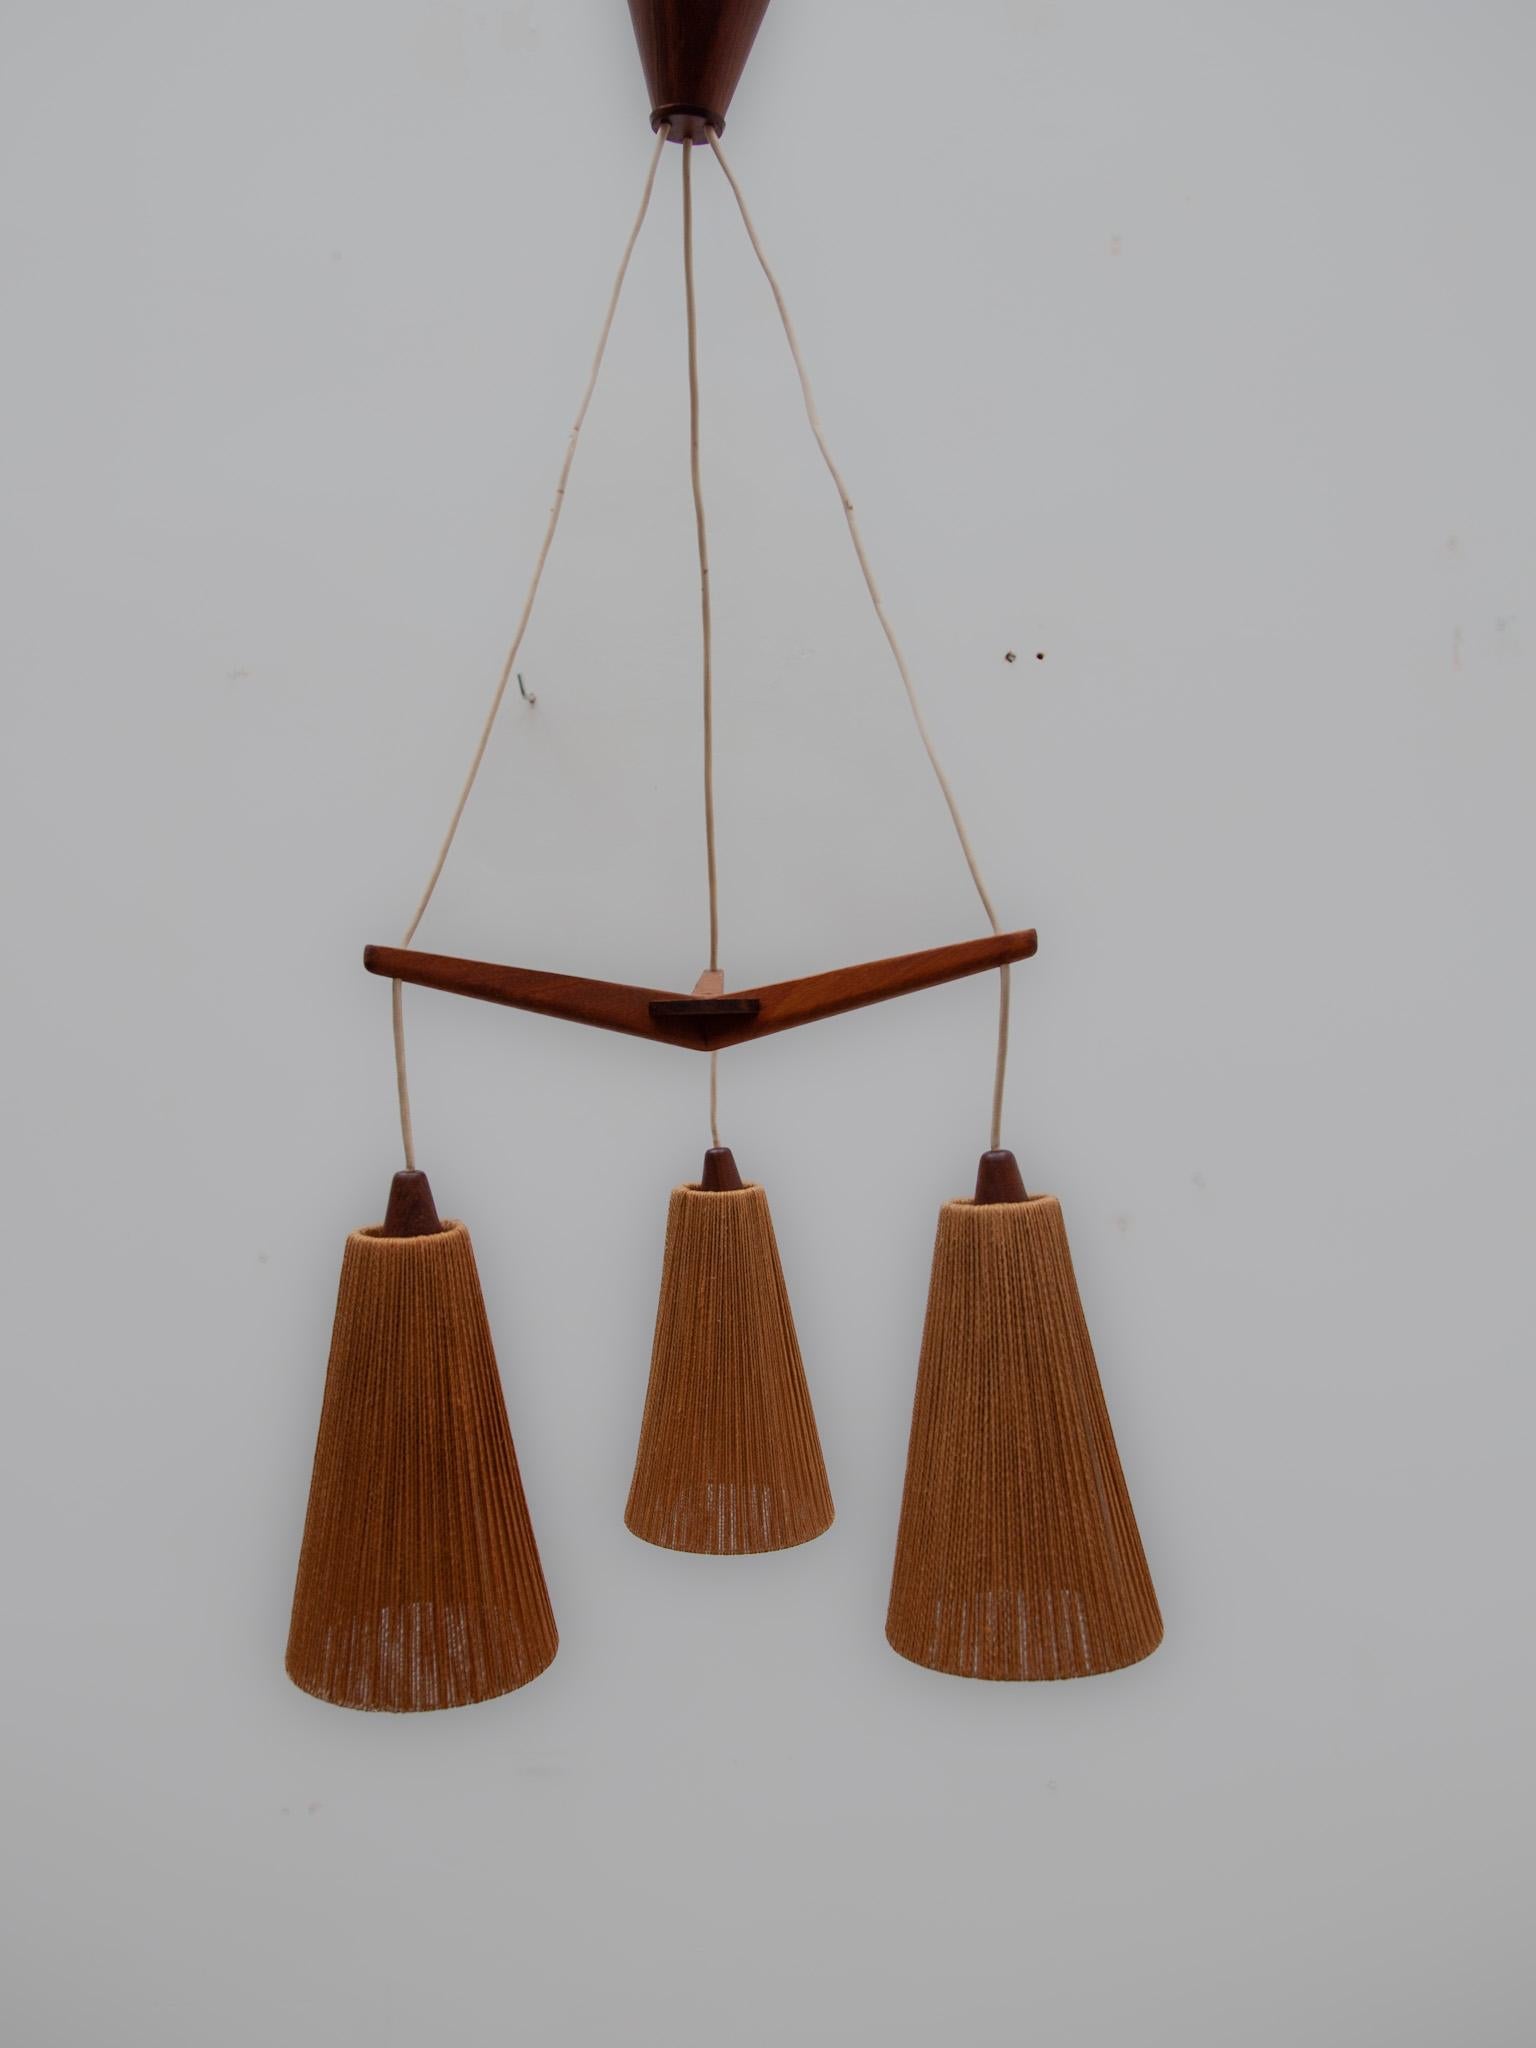 Scandinavian Modern Teak and Jute Cord Pendant Cascade Lamp by Temde, Germany, 1960s For Sale